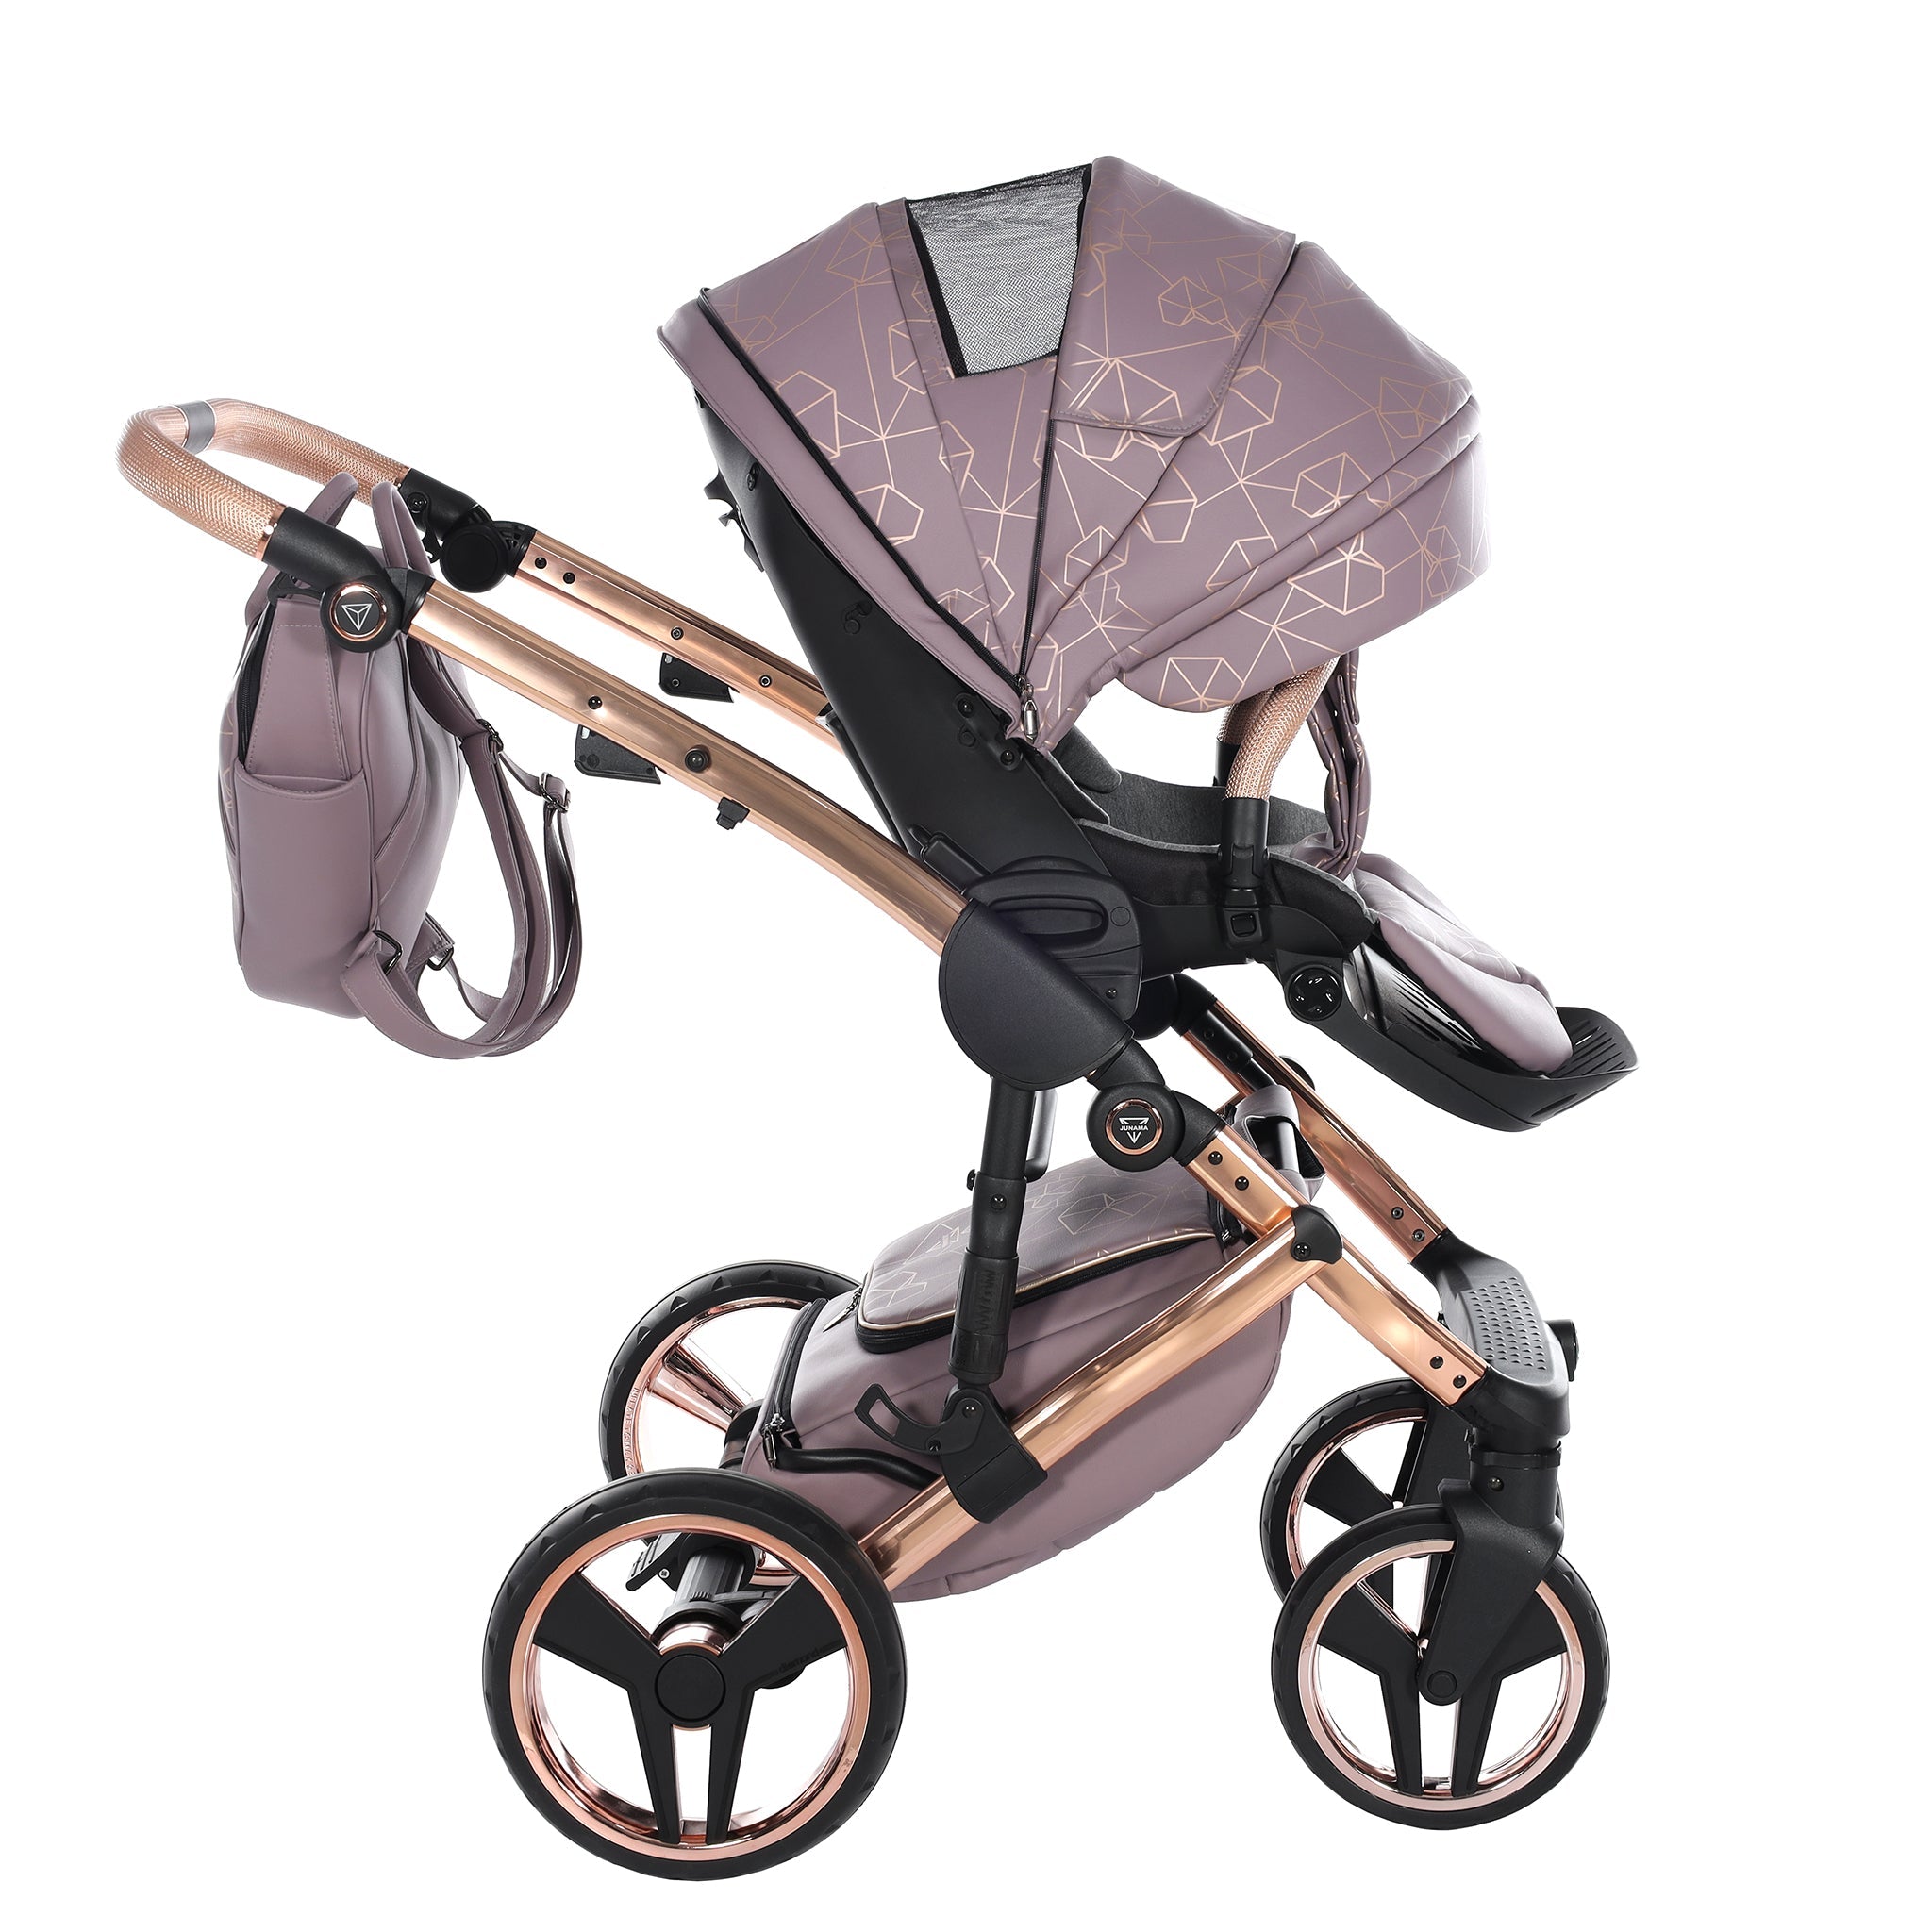 Junama Heart, baby prams or stroller 2 in 1 - Violet and Copper, Code number: JUNHERT04